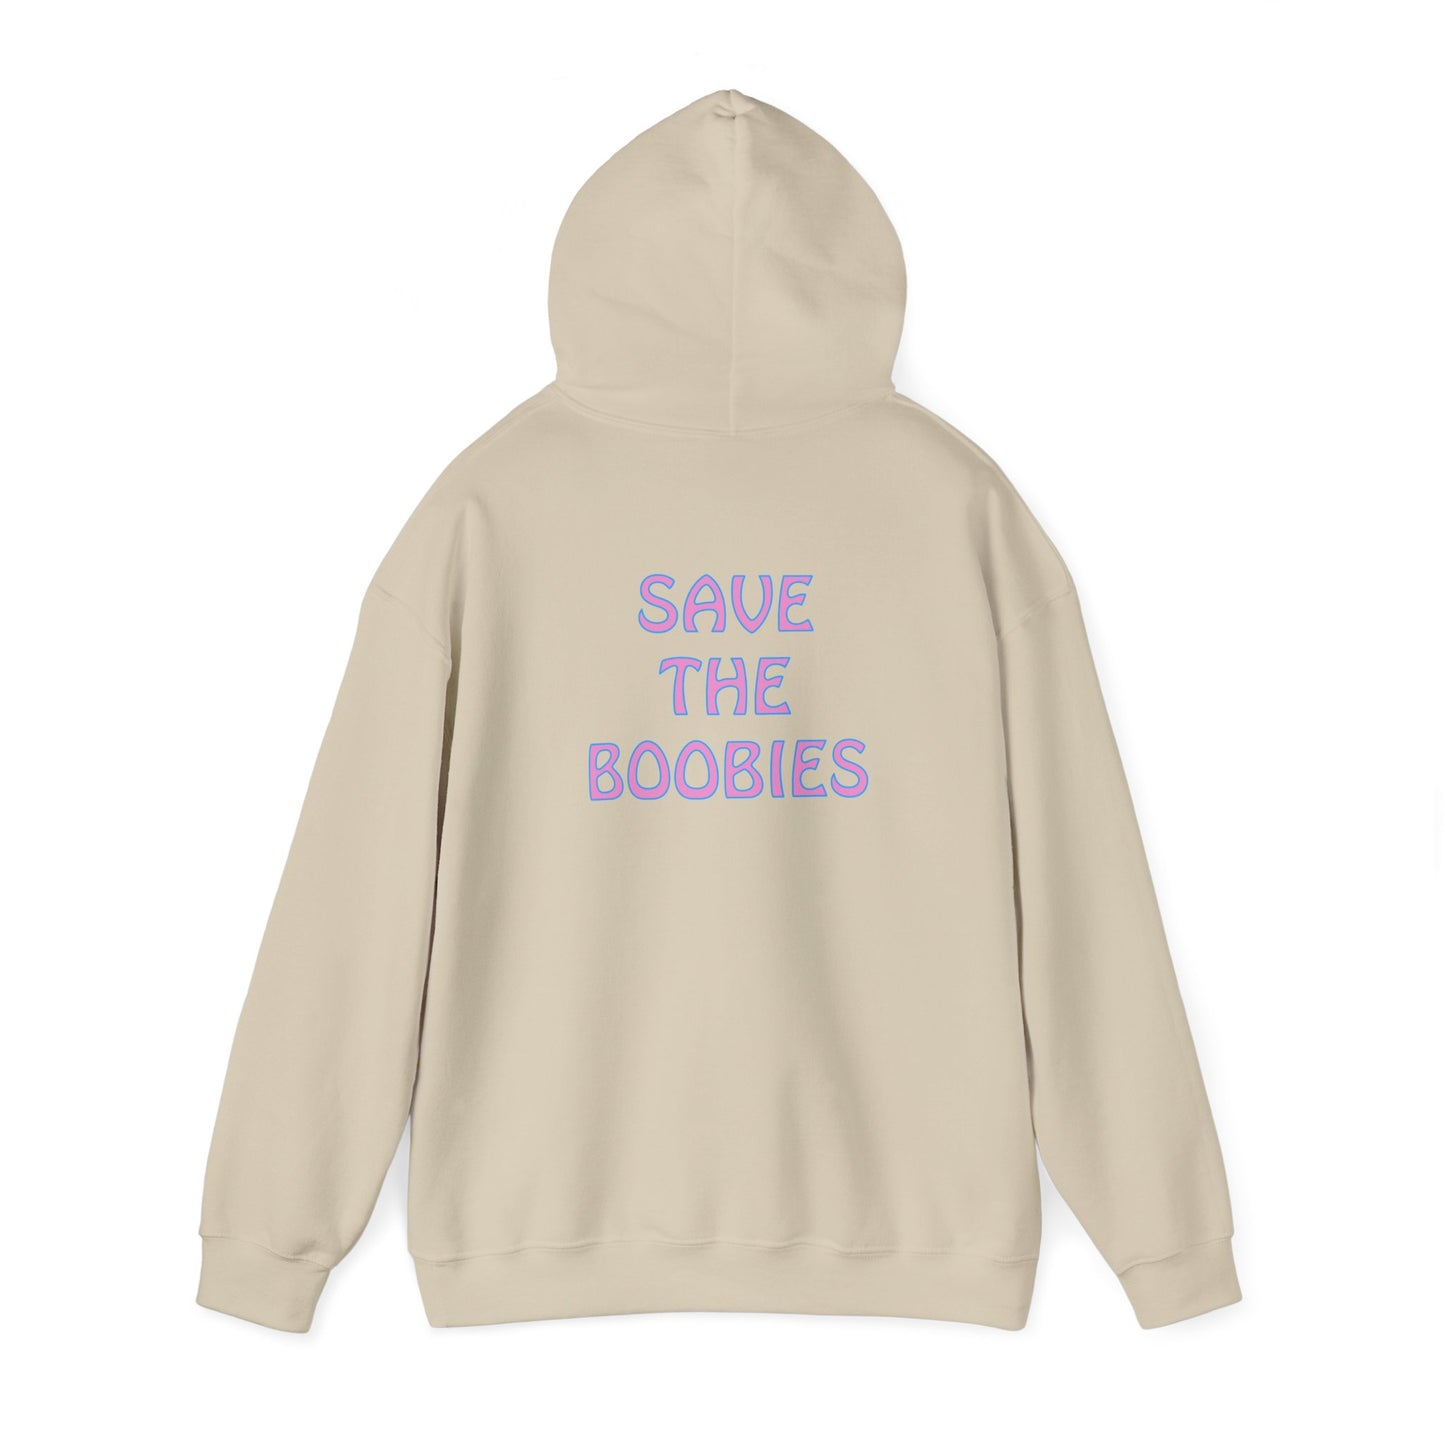 Save The Boobies Hooded Sweatshirt